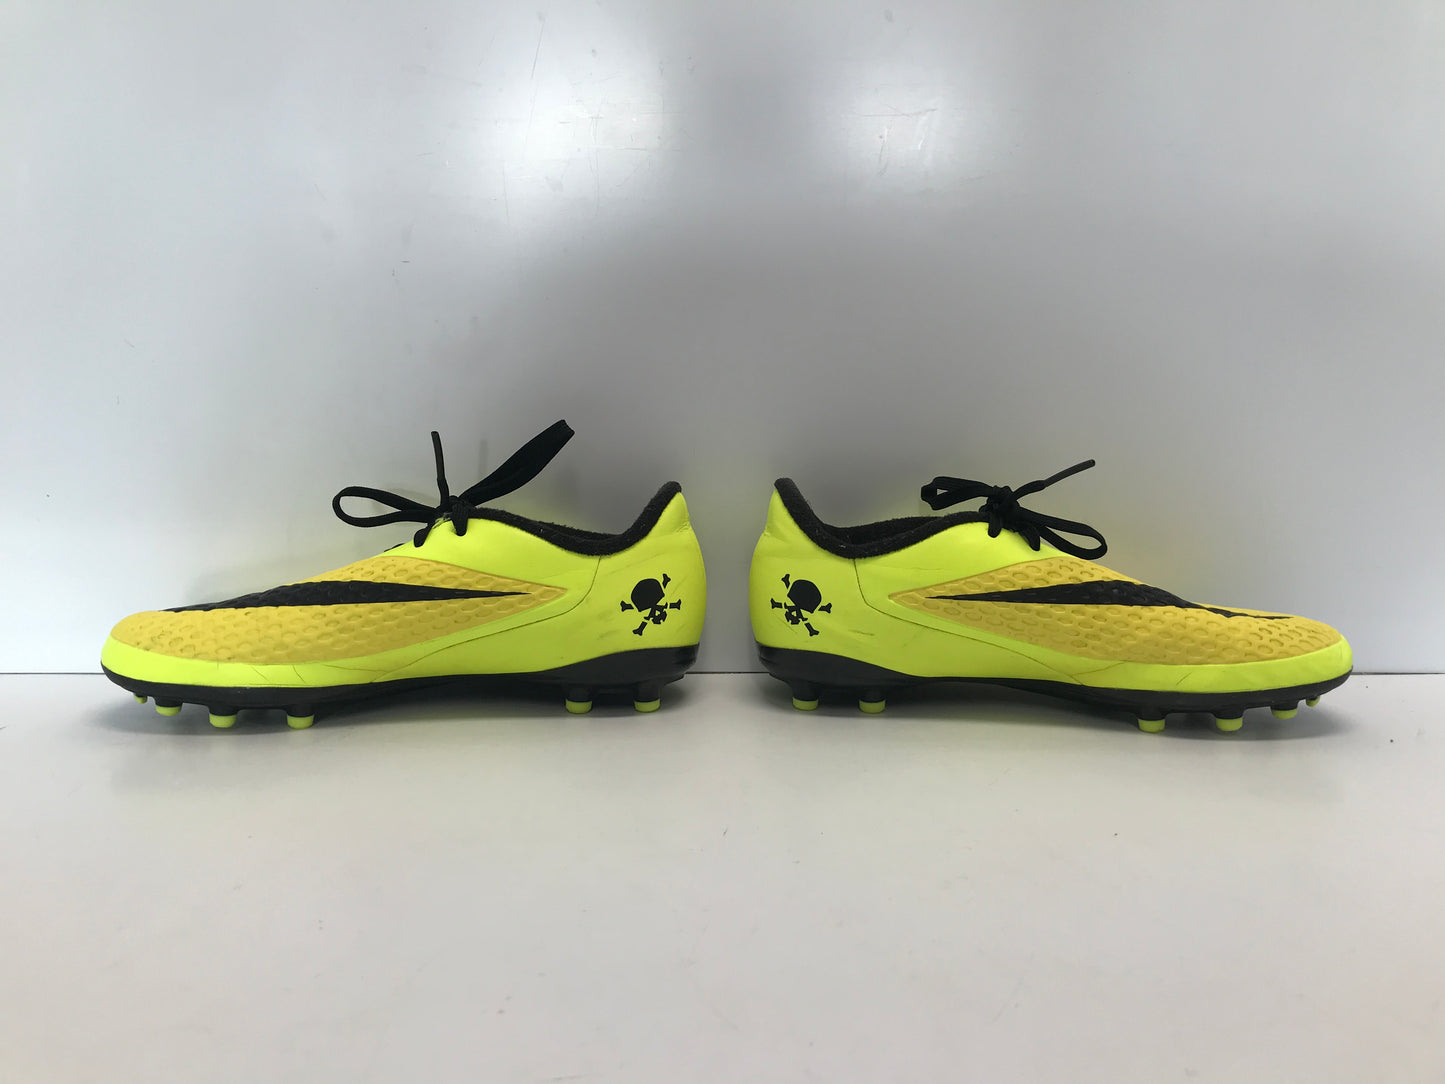 Soccer Shoes Cleats Child Size 3 Nike Hyper Venom Lime Black